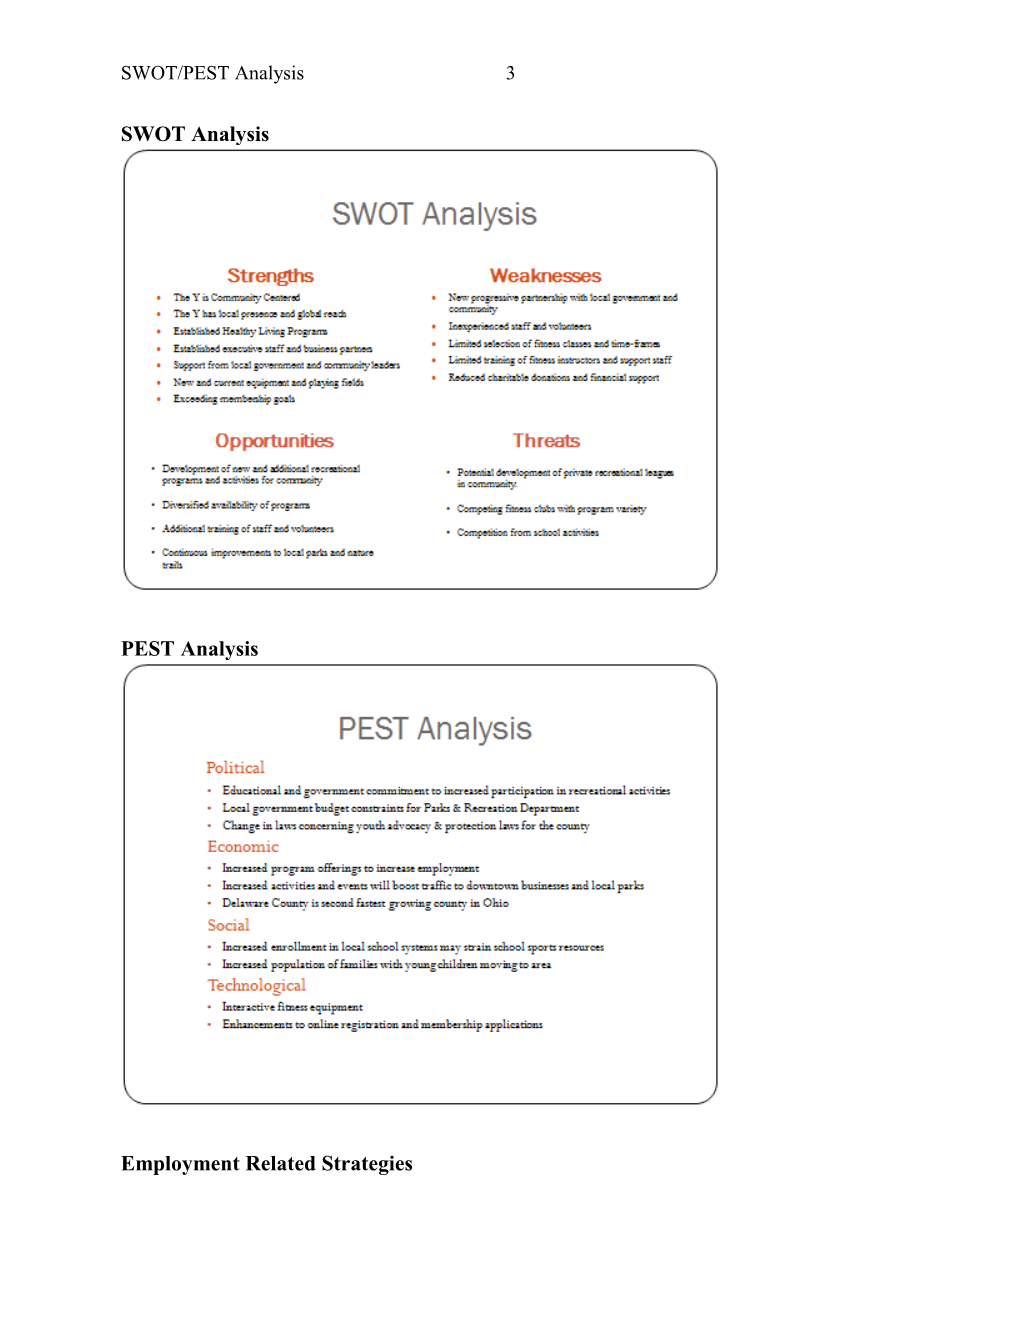 SWOT/PEST Analysis1